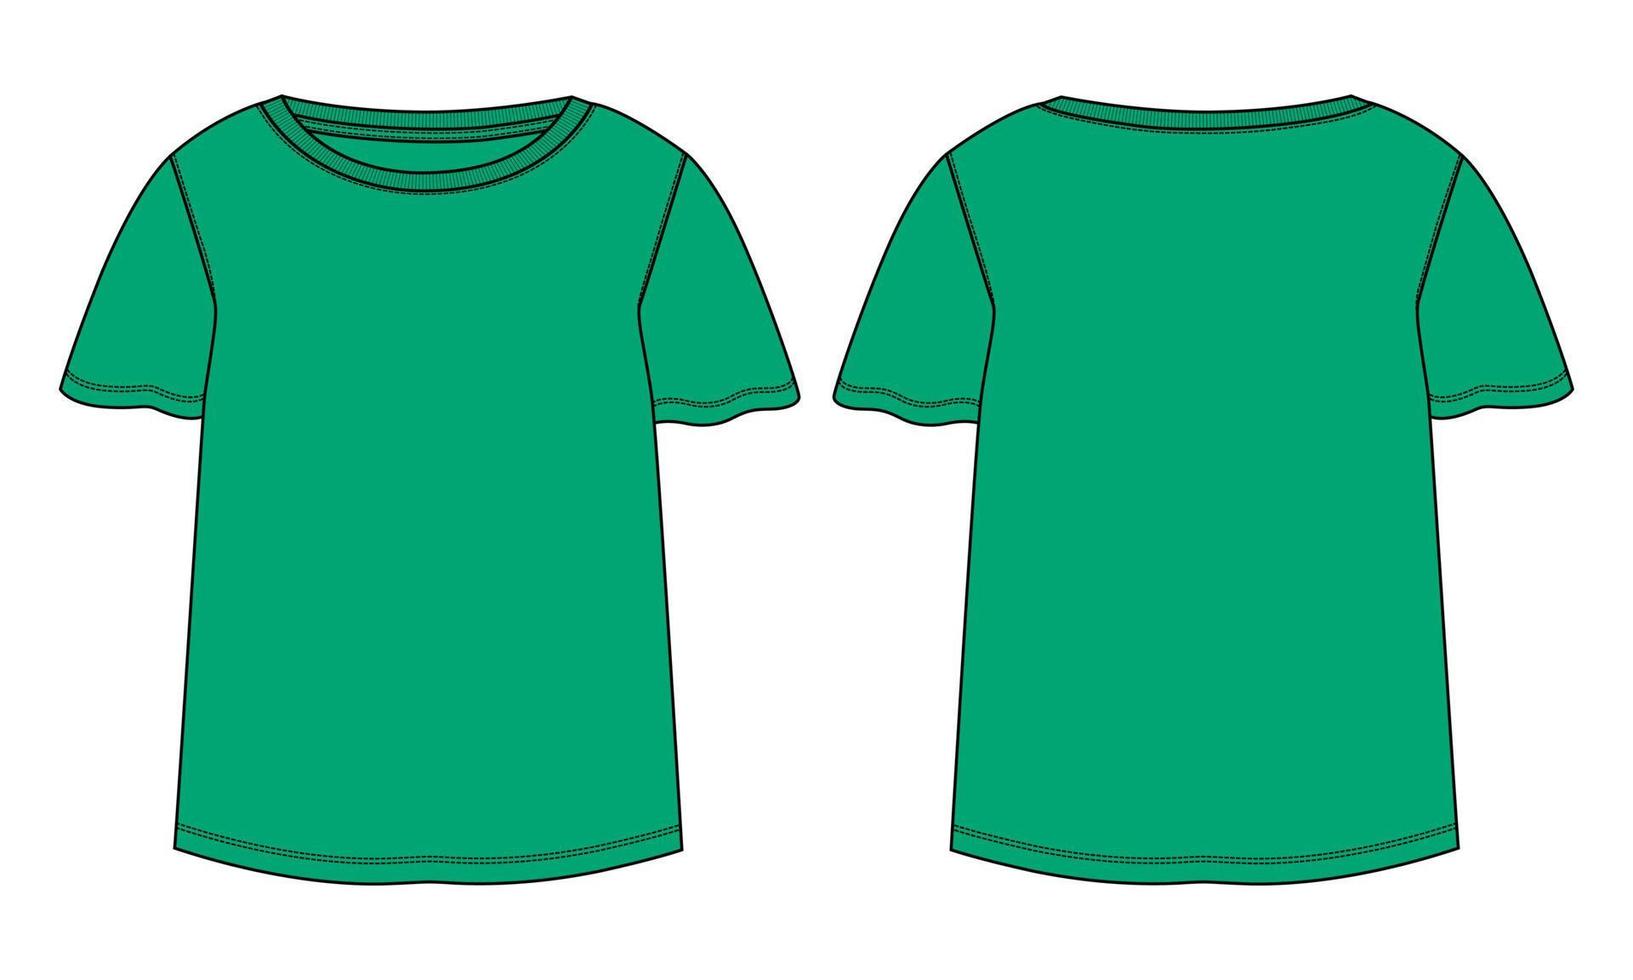 camiseta tops moda técnica boceto plano vector plantilla de color verde para damas y niñas